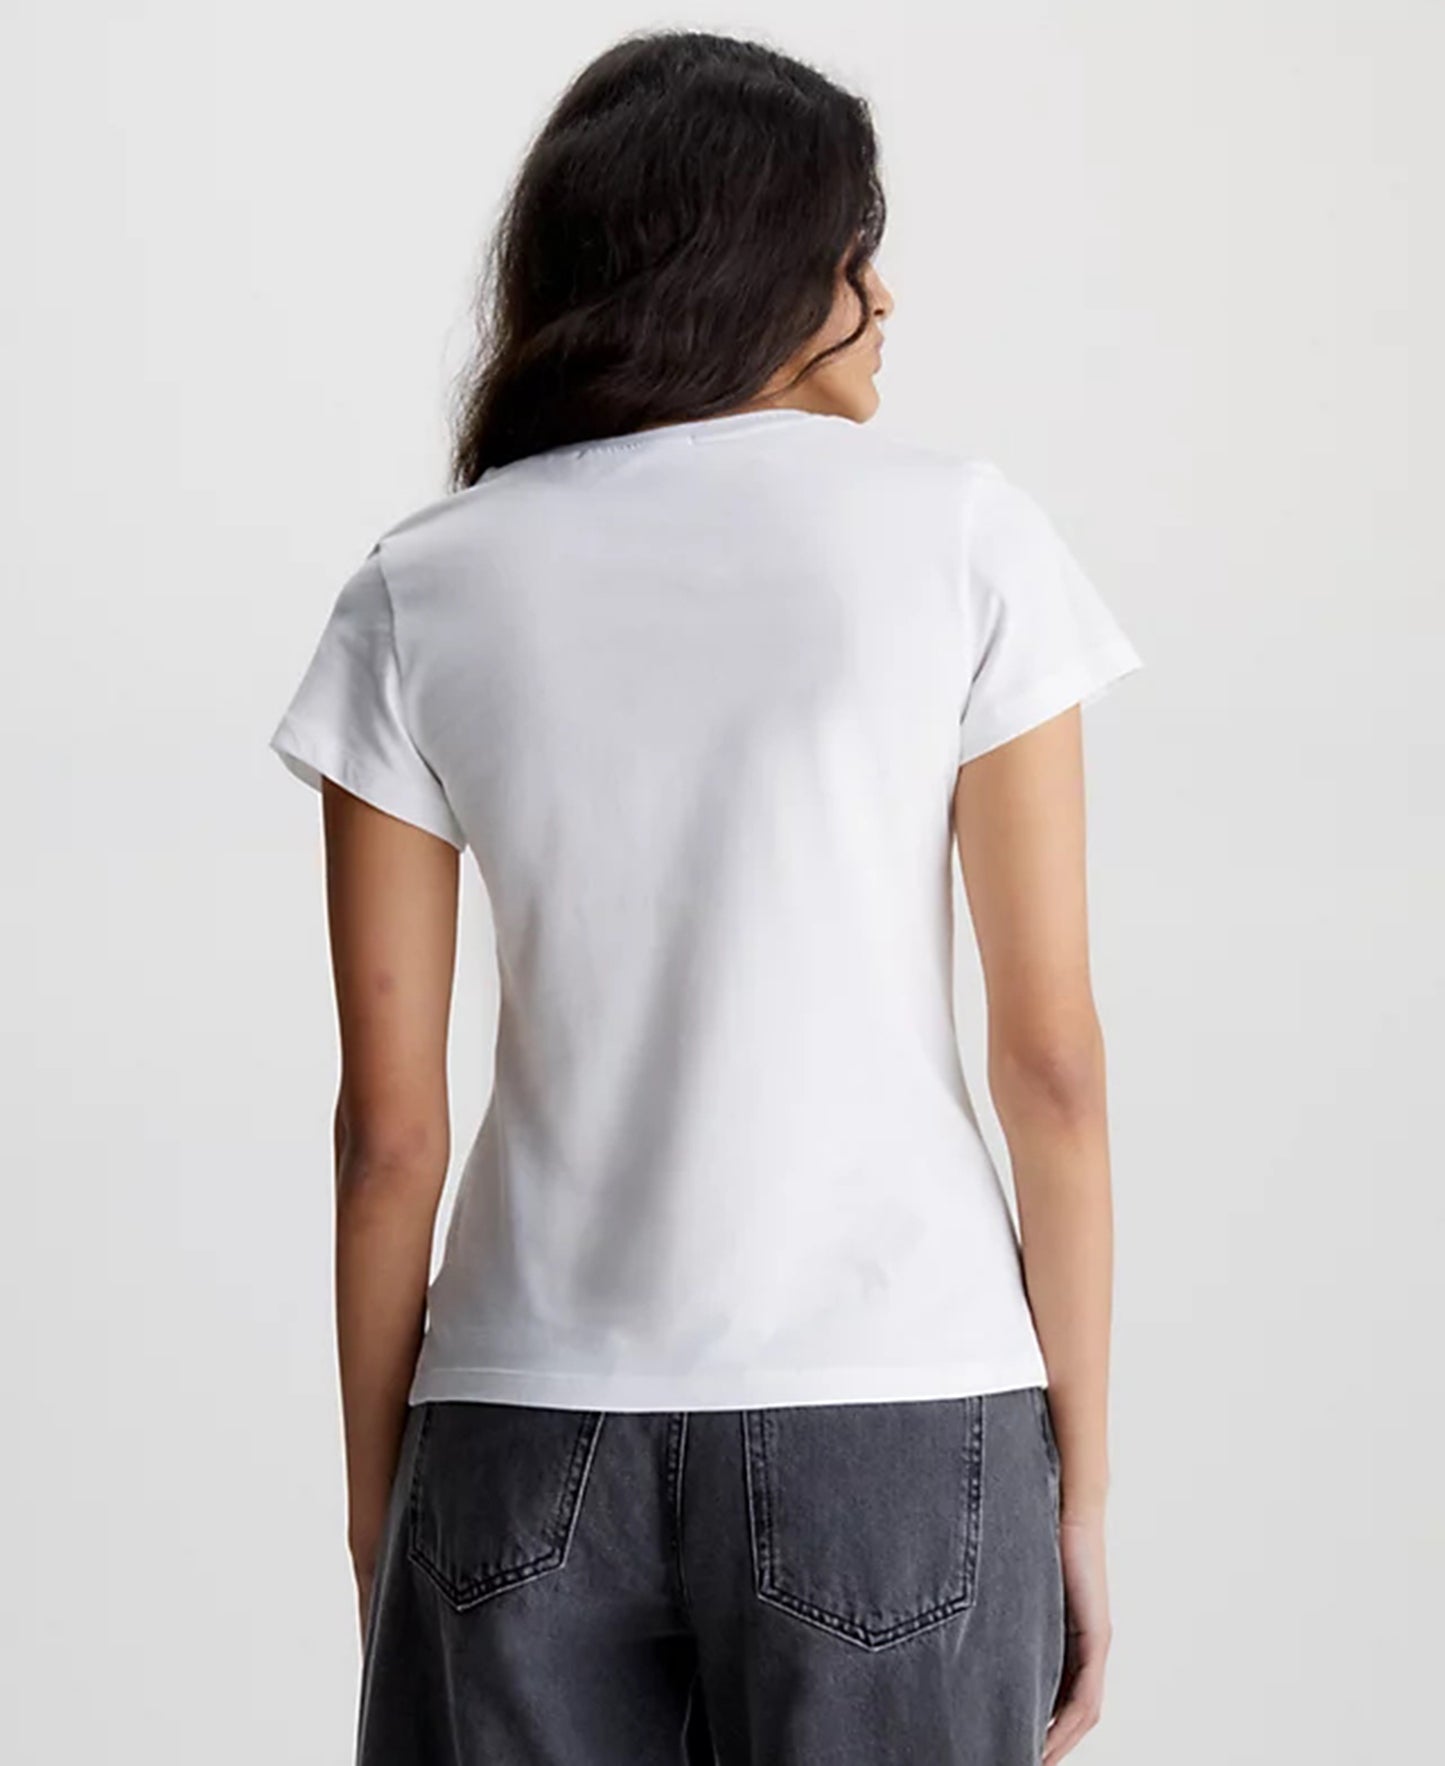 Calvin Klein Jeans T-Shirt  J20J220253